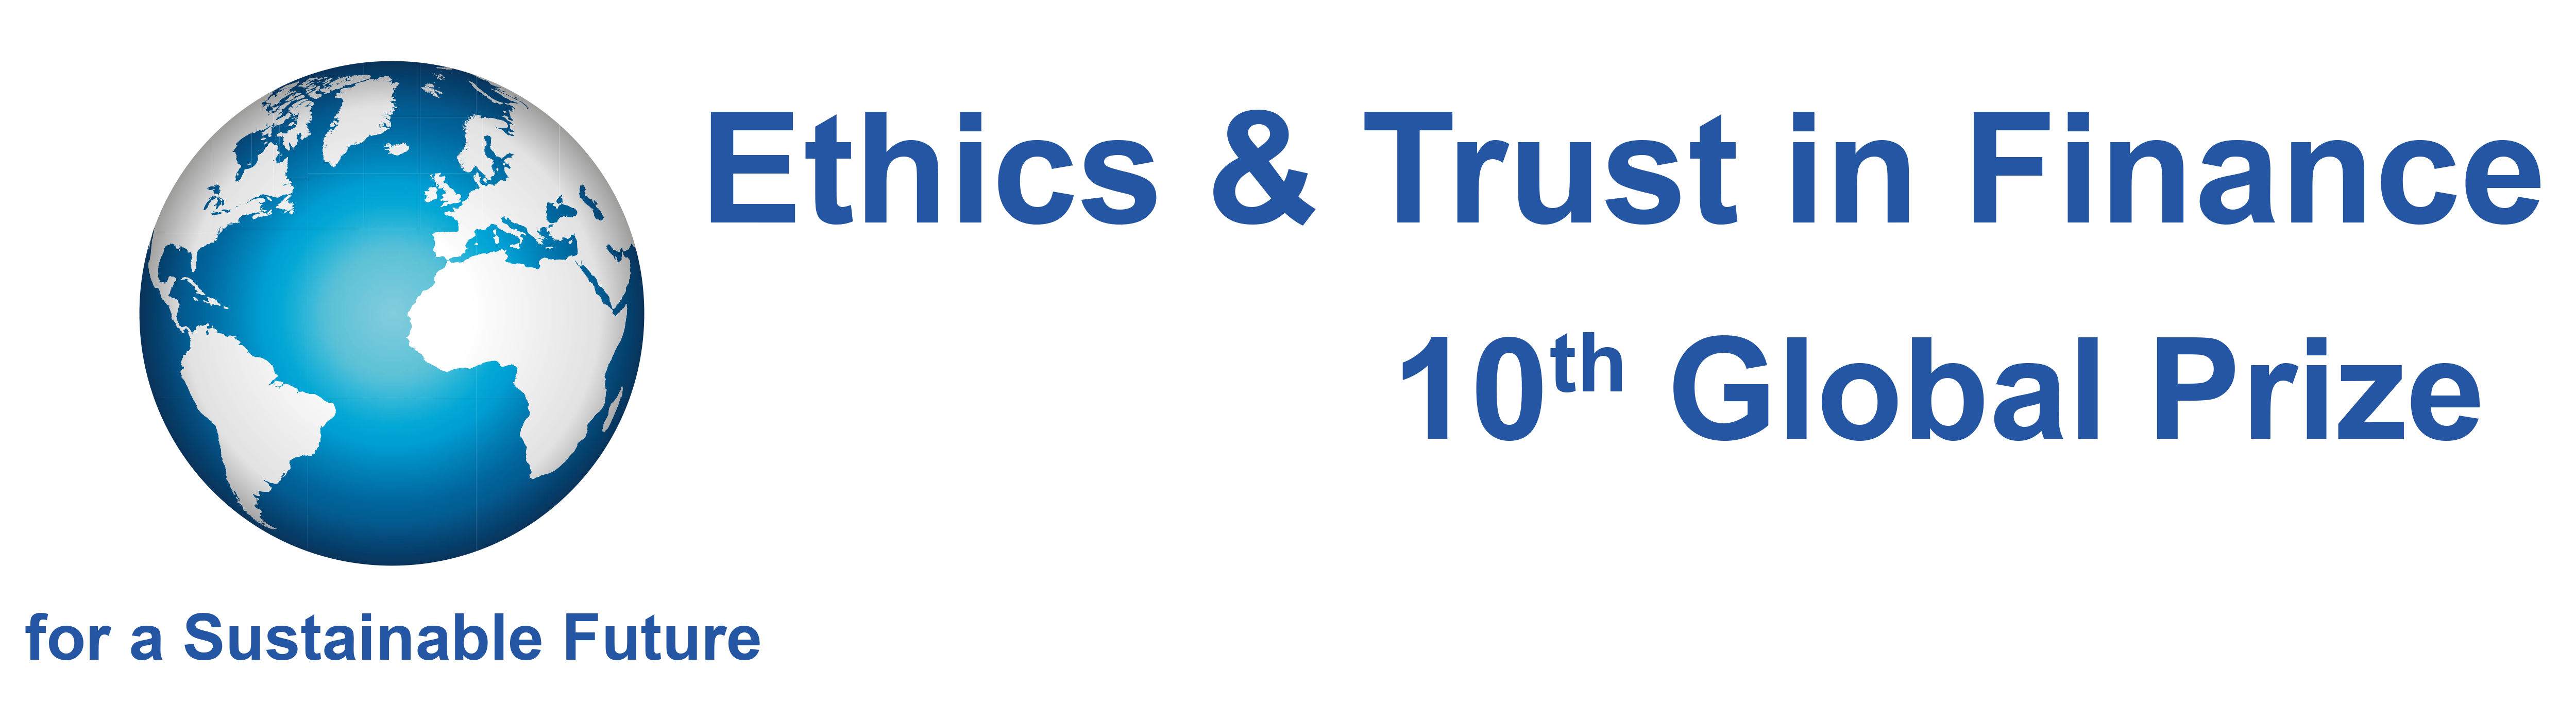 Ethics & Trust in Finance